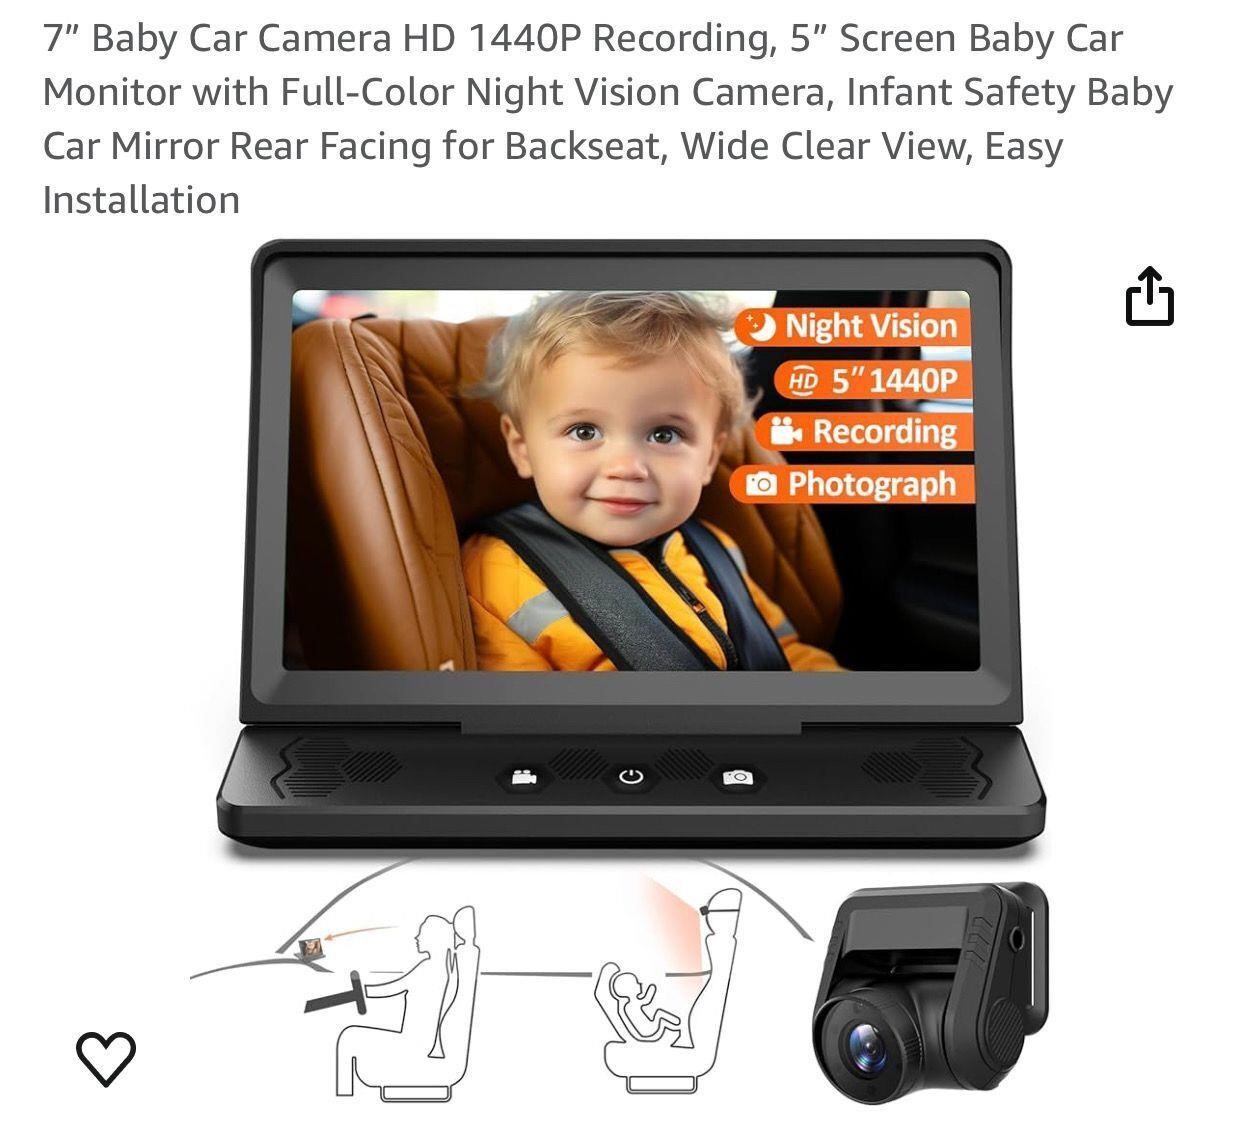 7" Baby Car Camera HD